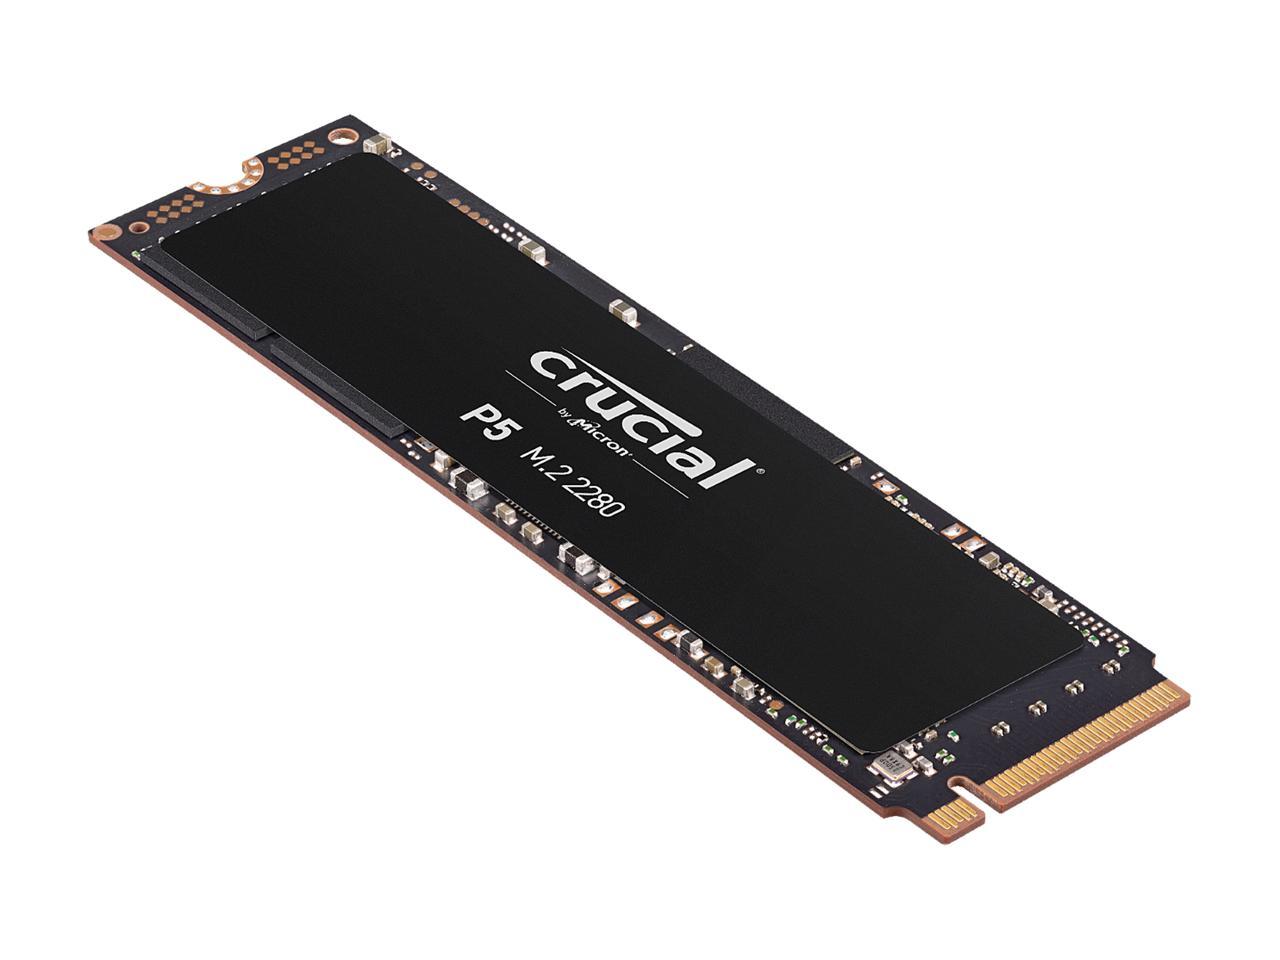 Crucial P5 1TB 3D NAND NVMe Internal SSD - Newegg.com